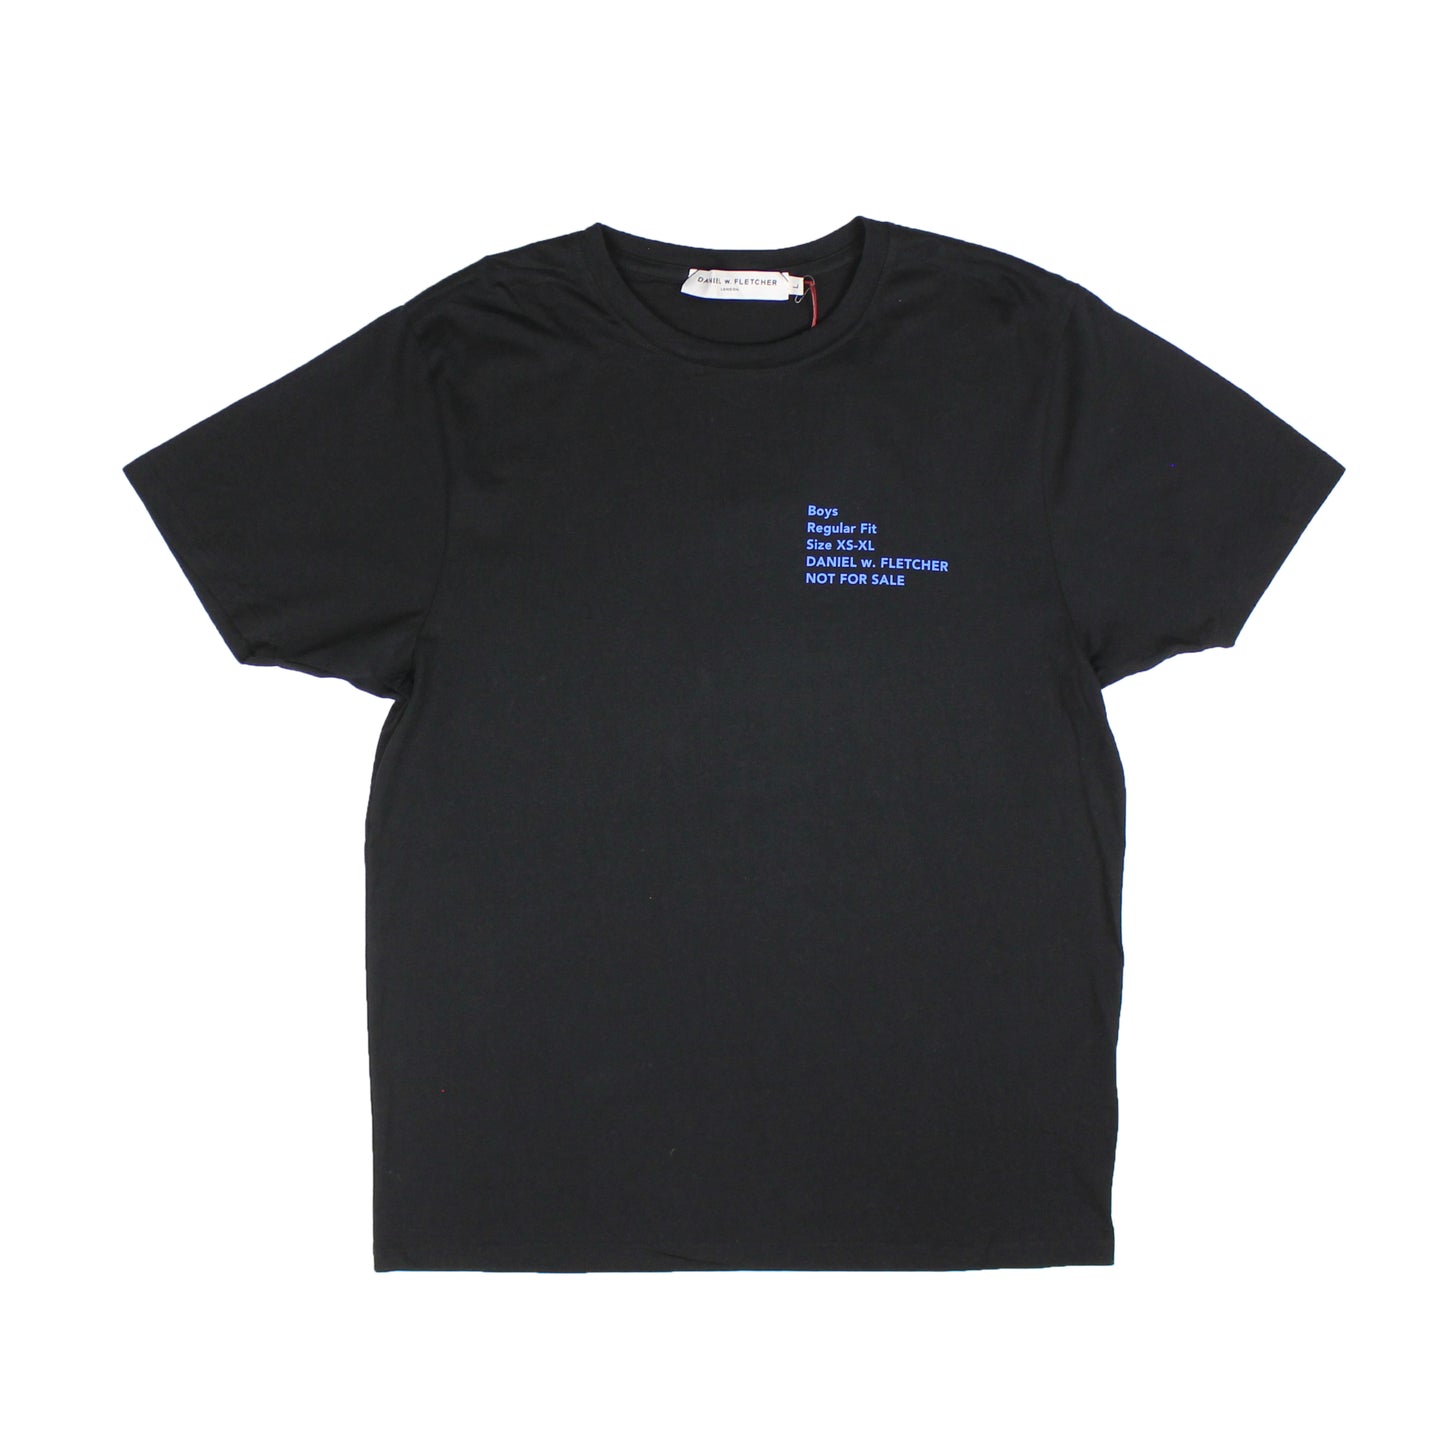 Daniel W. Fletcher Not For Sale T-Shirt - Black